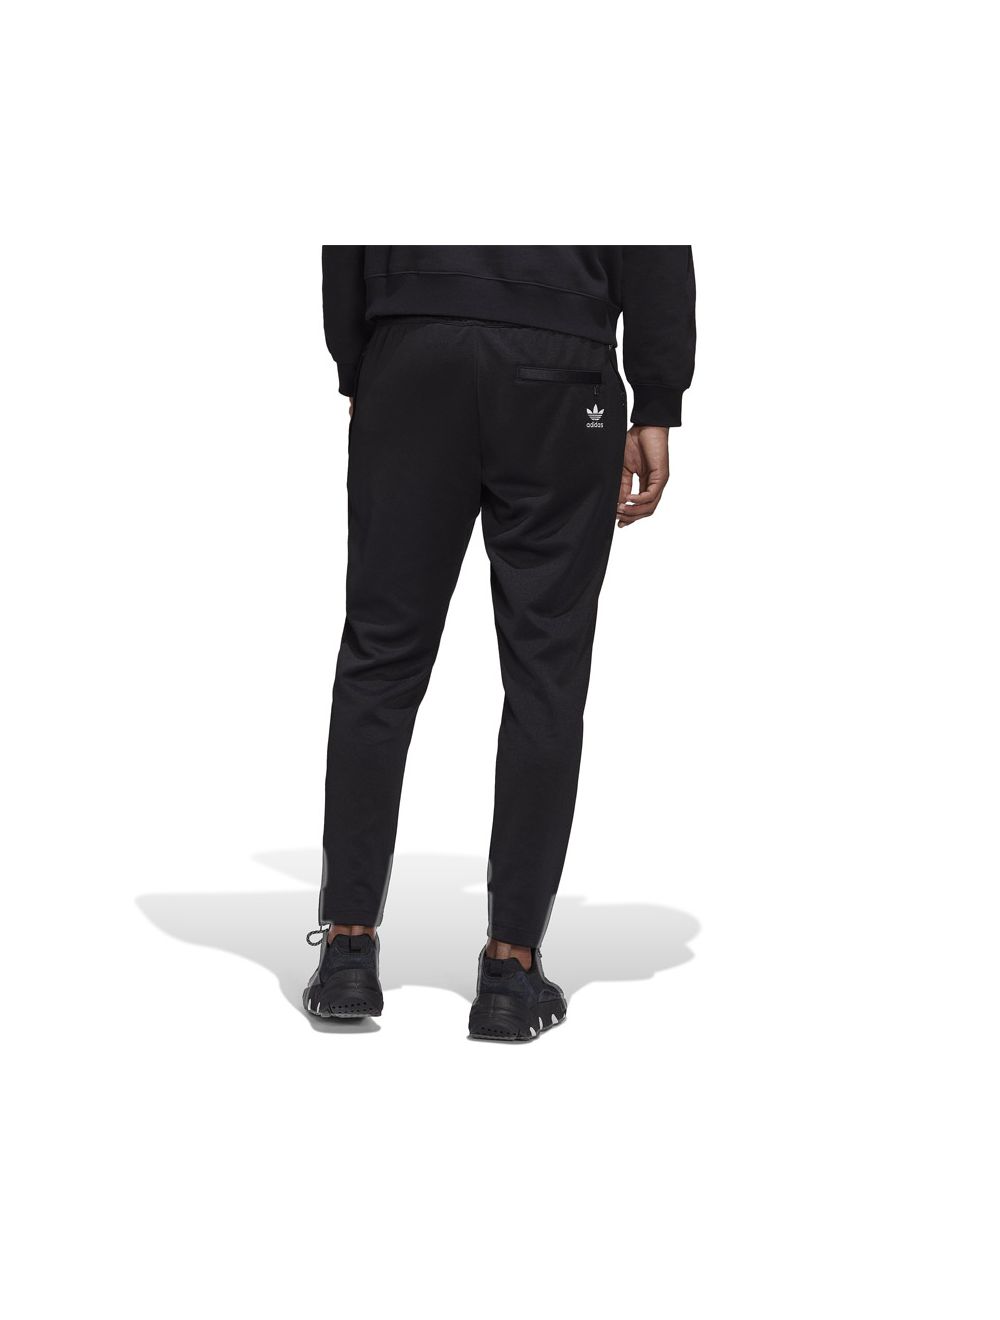 adidas Originals SST Track Pants Black